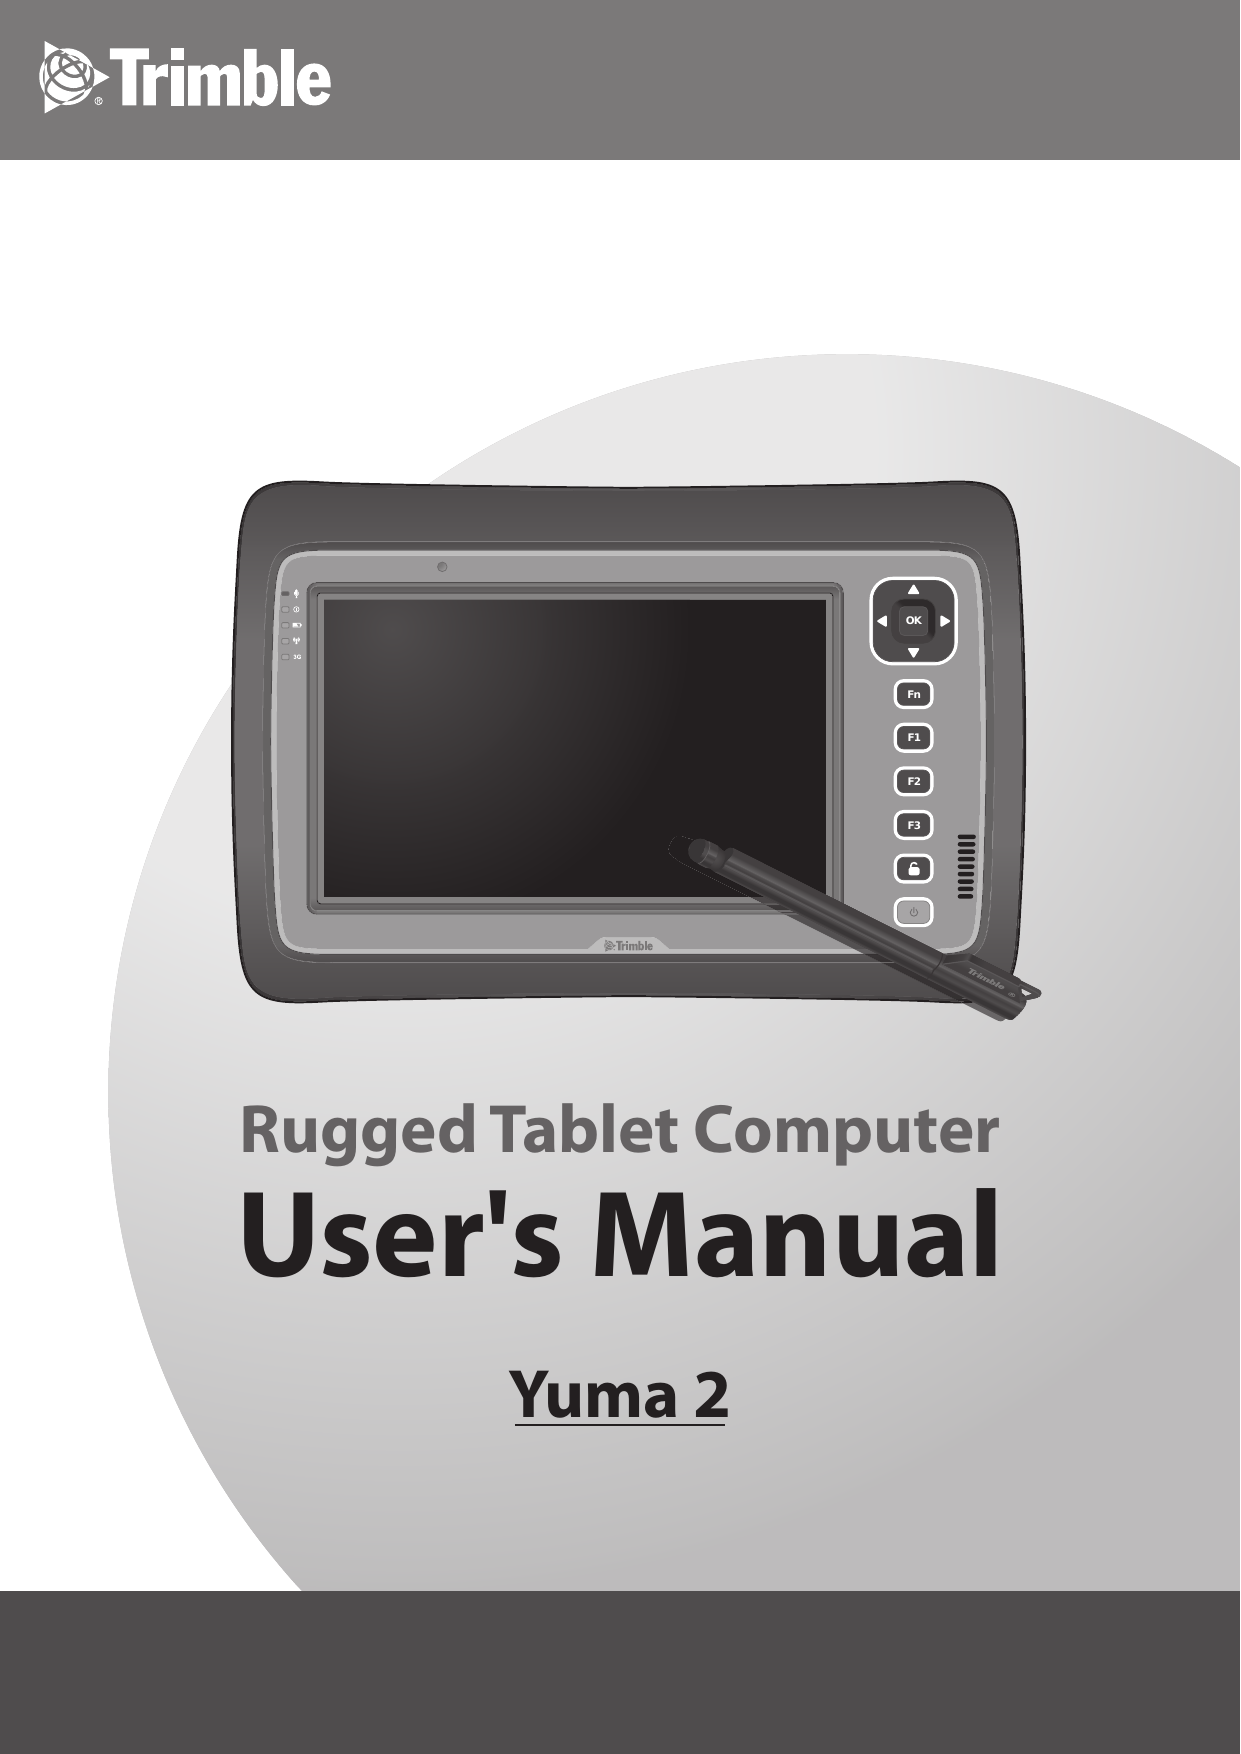 OKFnF1F2F3Rugged Tablet ComputerYuma 2User&apos;s Manual